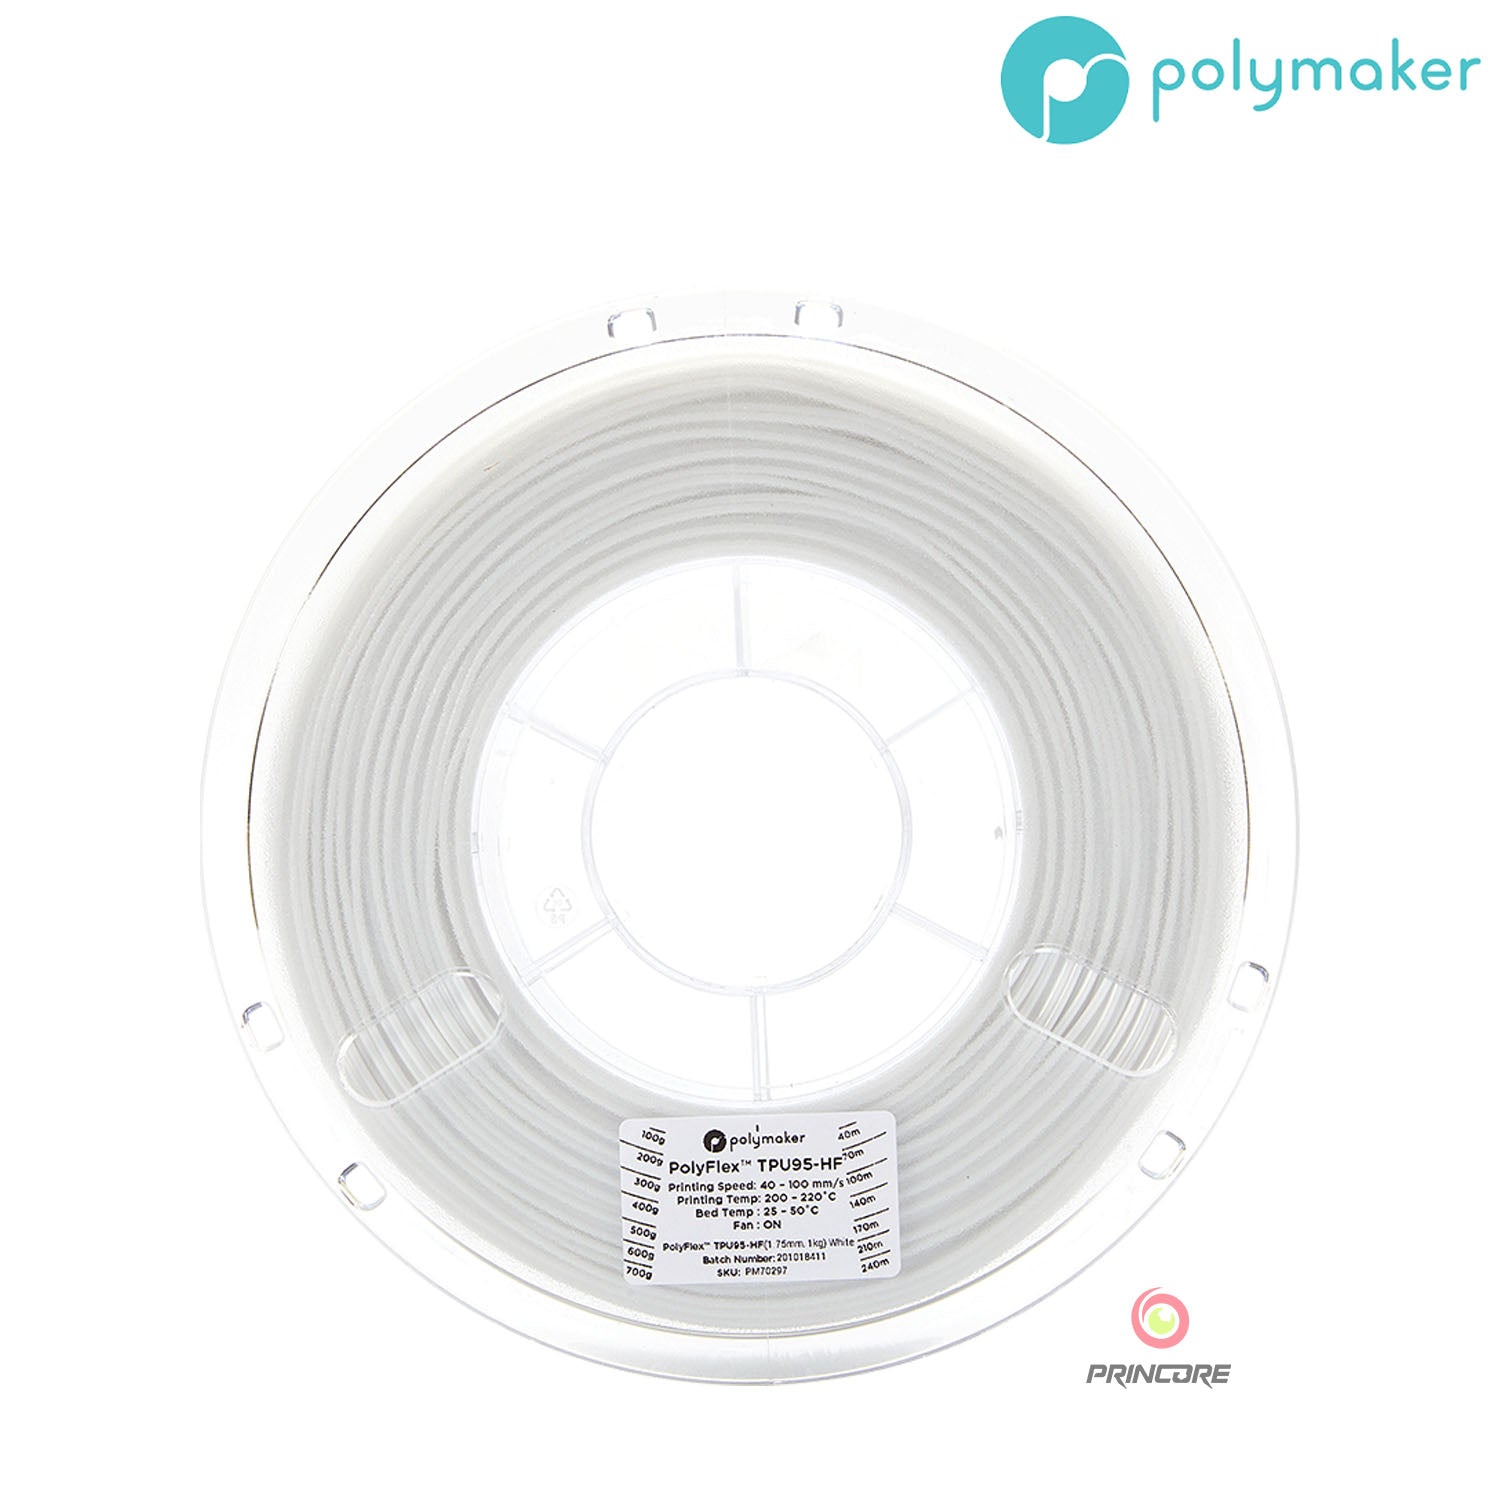 Polymaker PolyFlex™ TPU95 HF - Weiß [1.75mm] (49,90€/Kg)